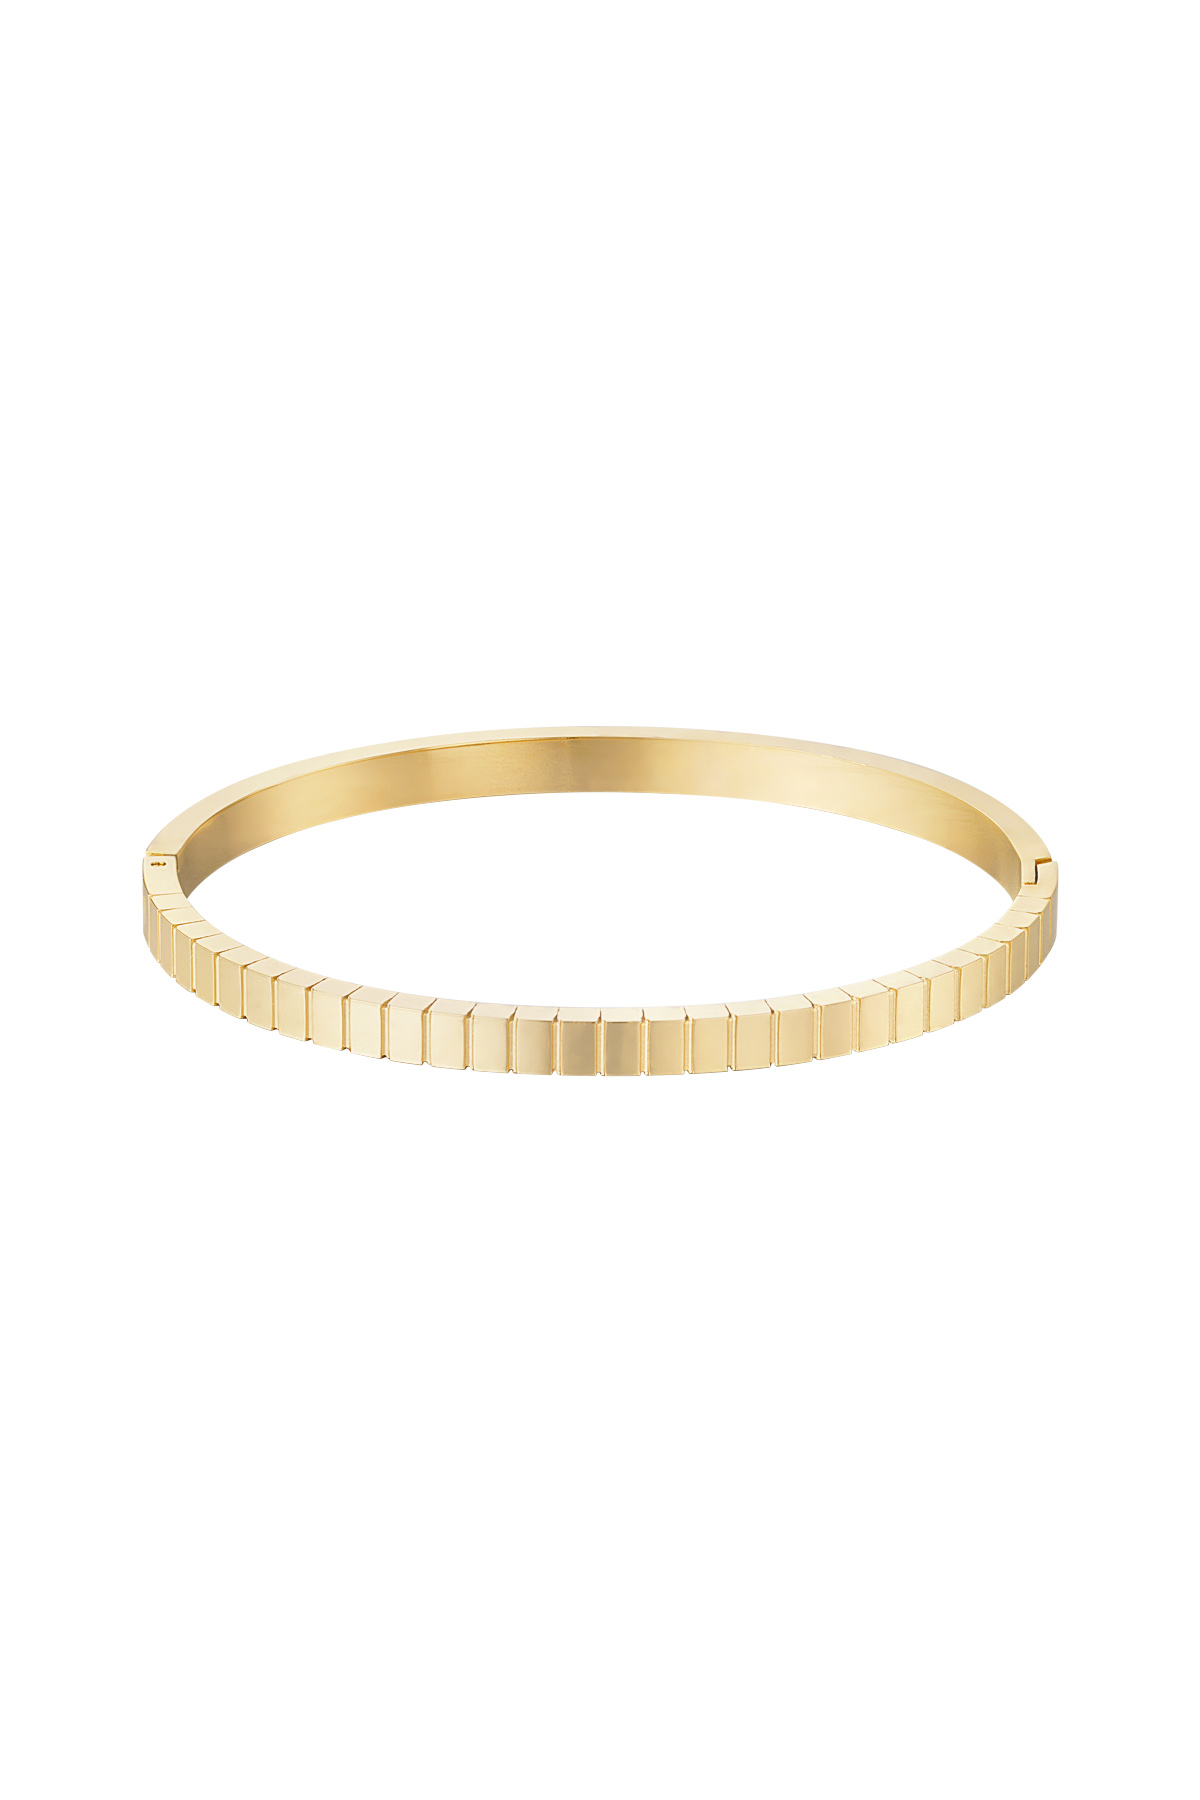 Slave bracelet stripes - gold